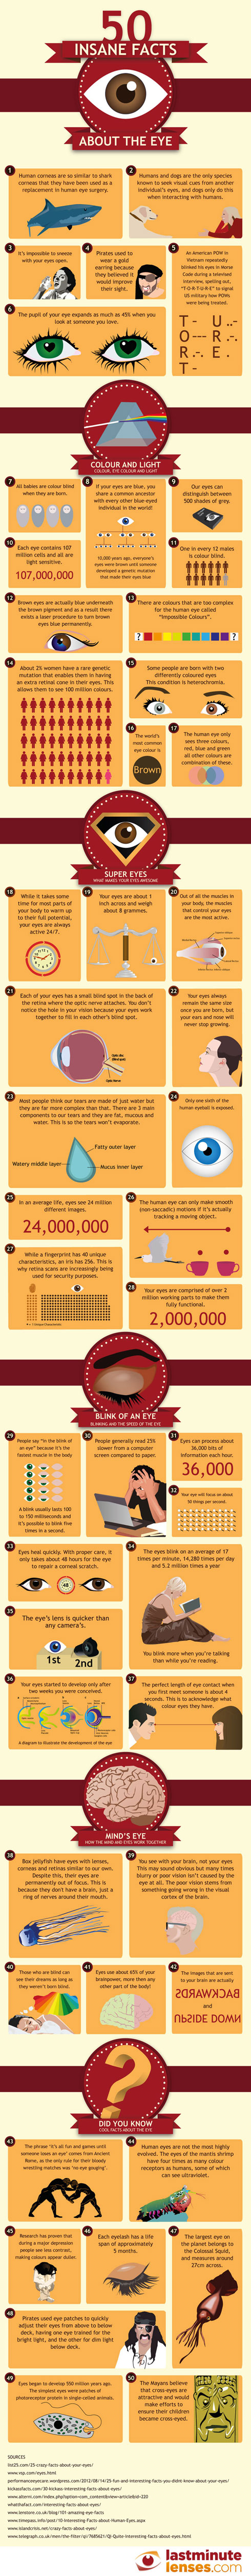 eye-infographic